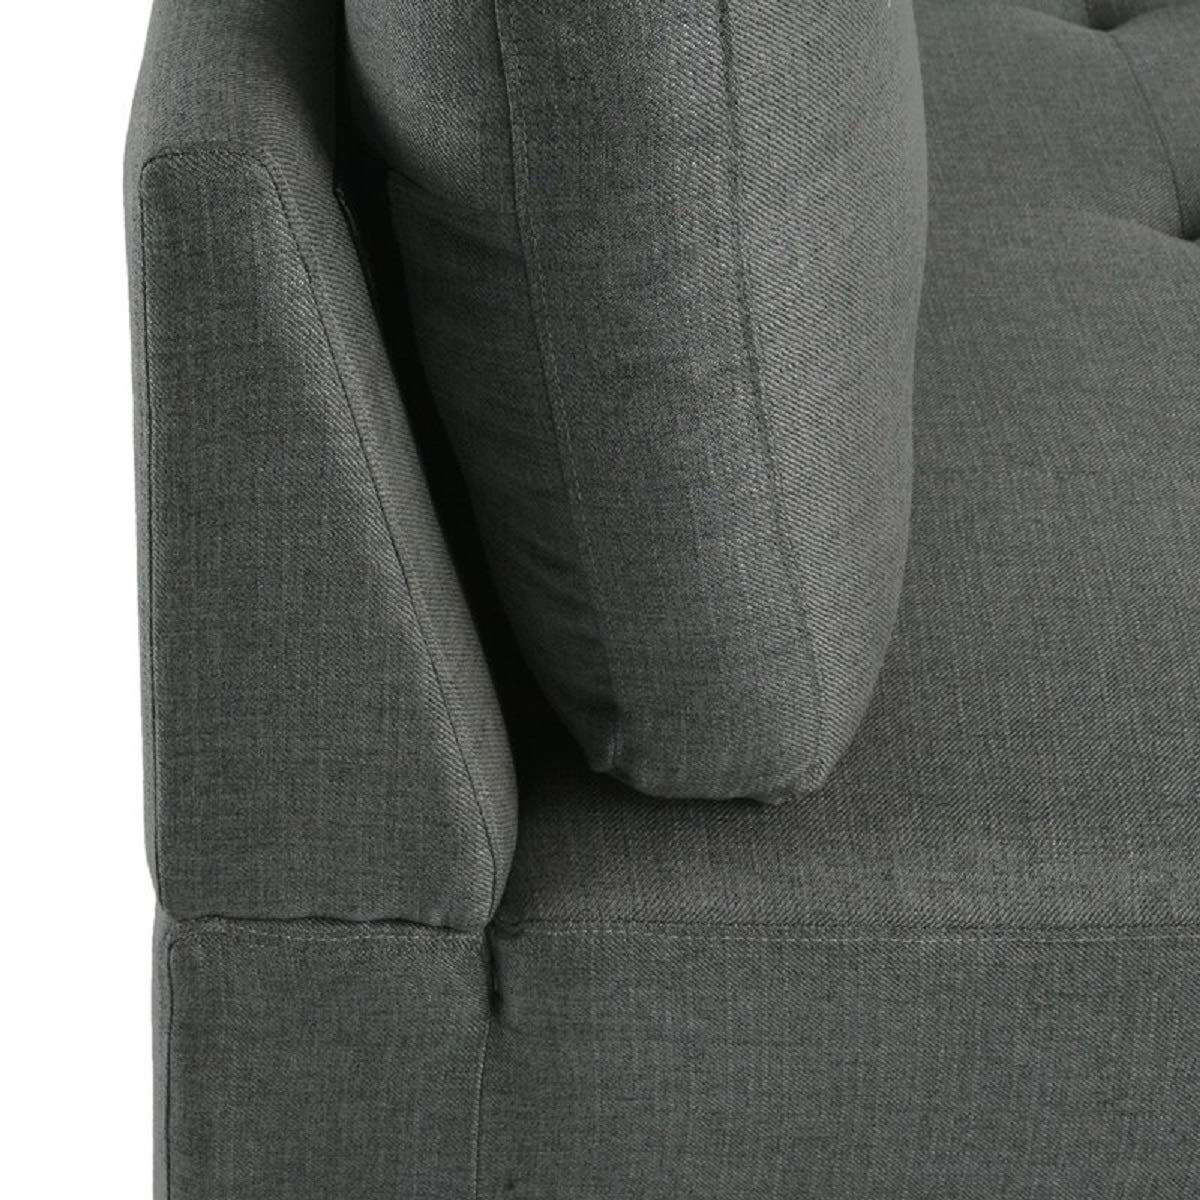 Designer Sofa Set:- Grey L Shape 6 Seater Fabric Luxury Furniture Sofa Set